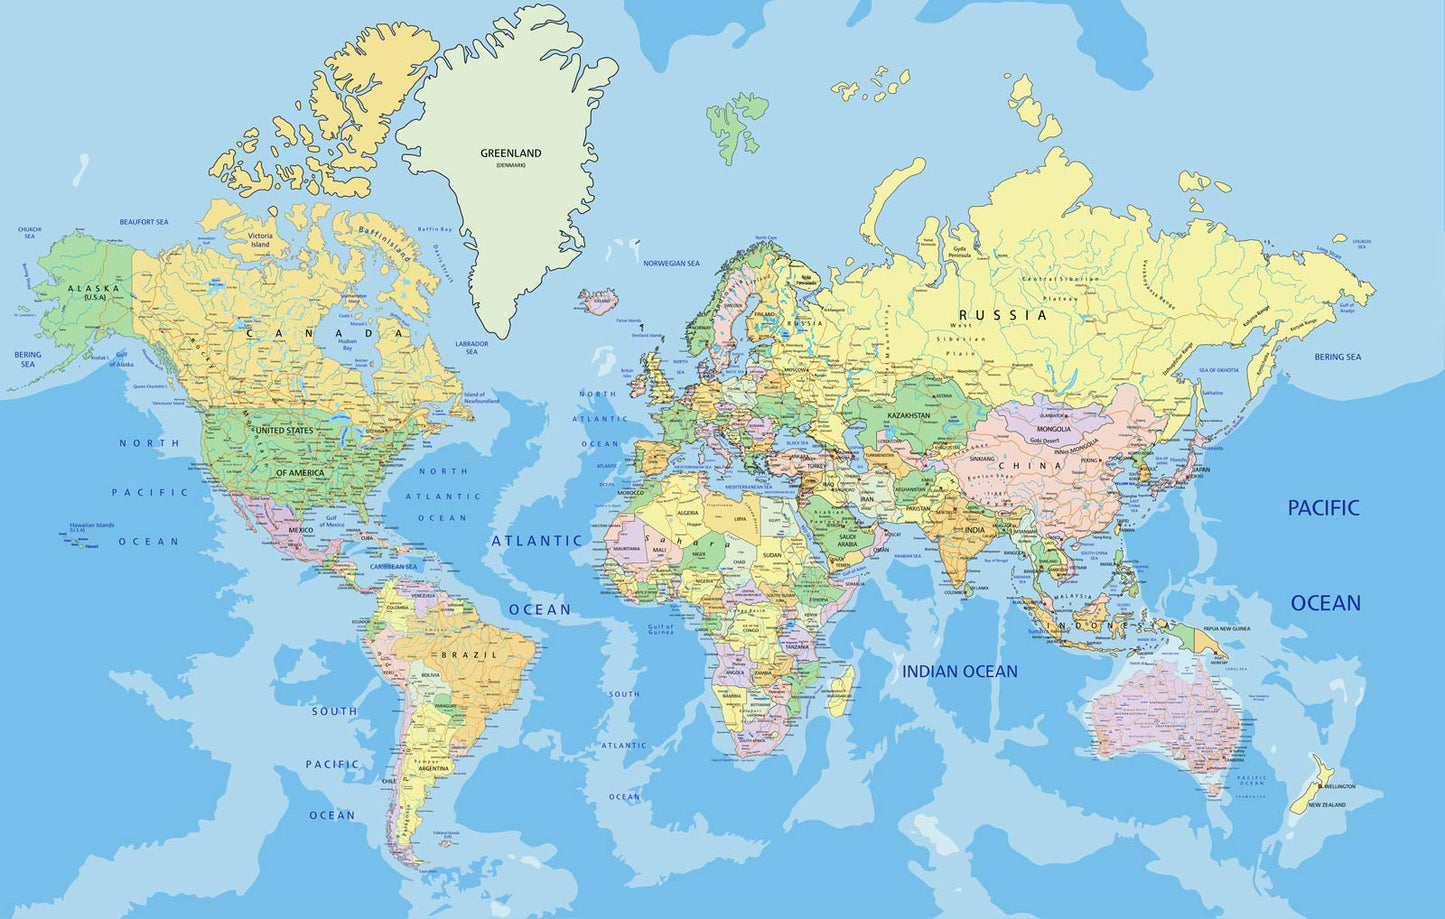 Colorful World Map Mural Wallpaper